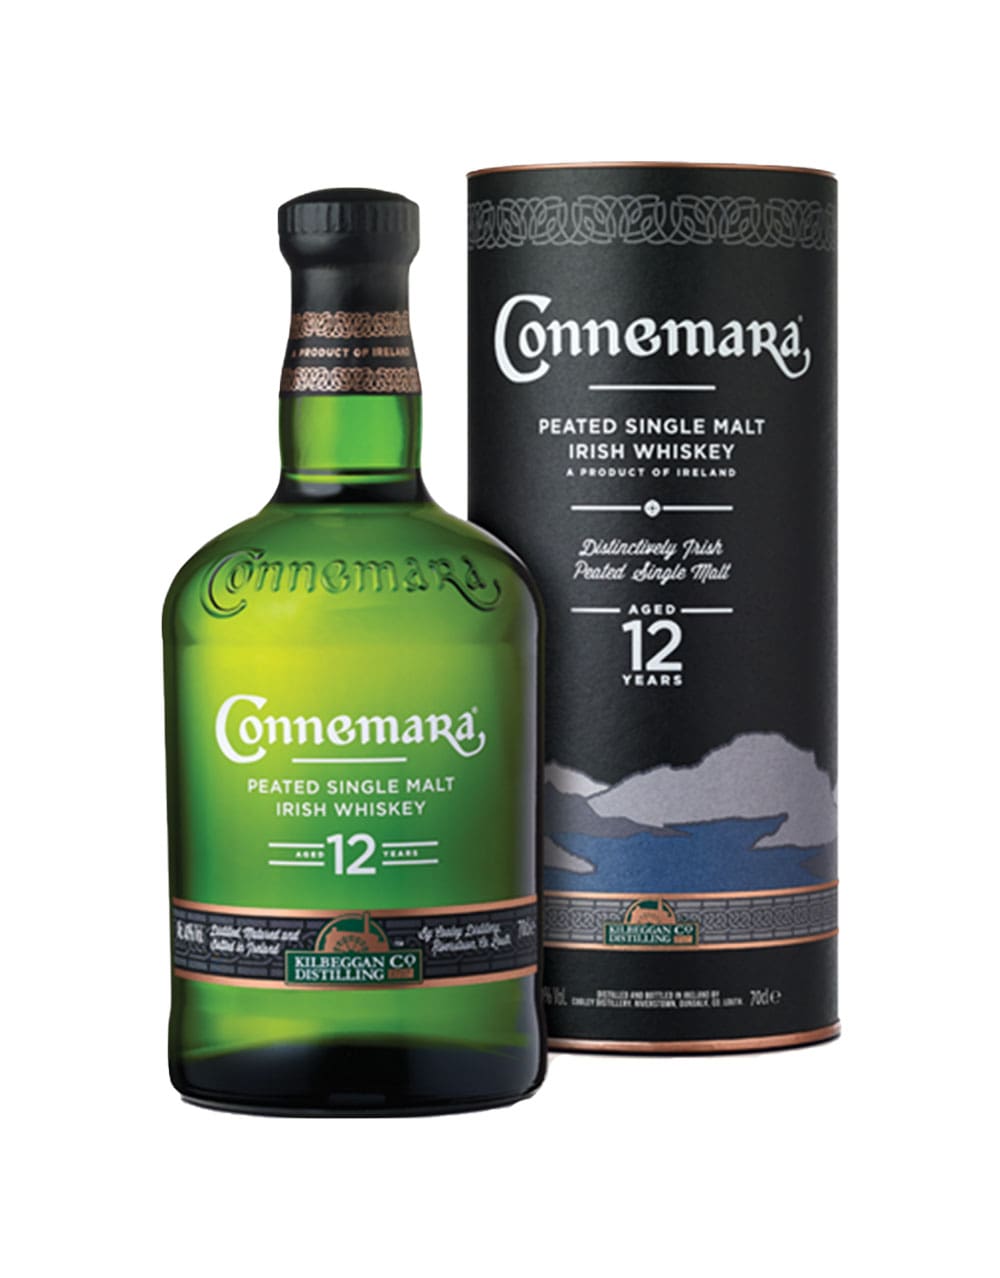 https://royalbatch.com/upload//products/1/connemara-12-year-peated-single-malt-irish-whiskey_RoyalBatch_E2JDAvDCuoG0.jpg